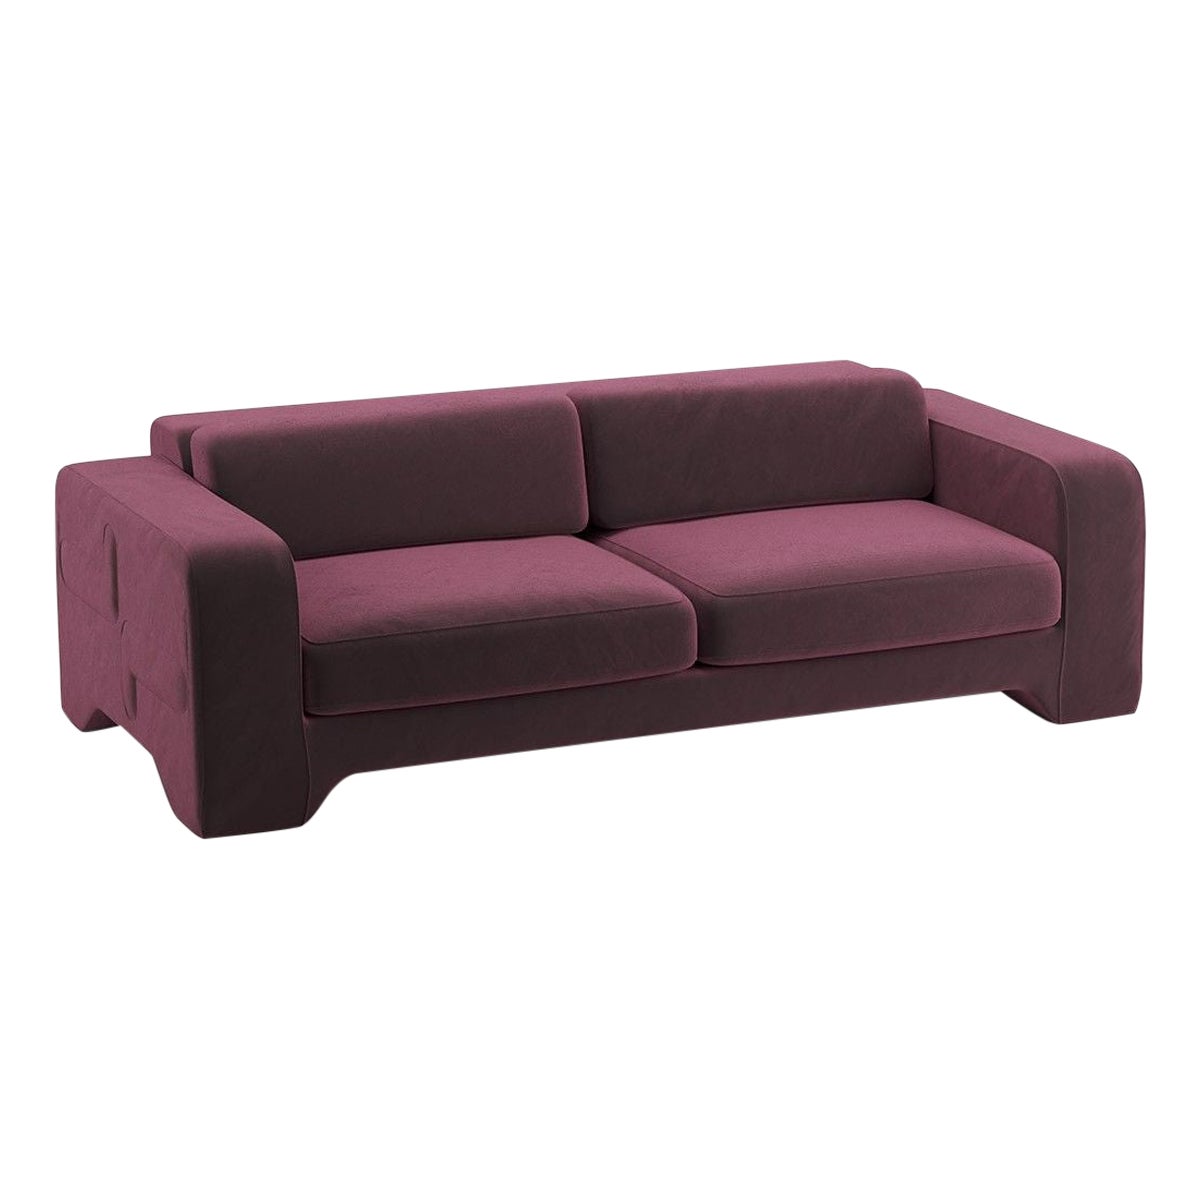 Popus Editions Giovanna 4 Seater Sofa in Bordeaux Burgundy Como Velvet Fabric